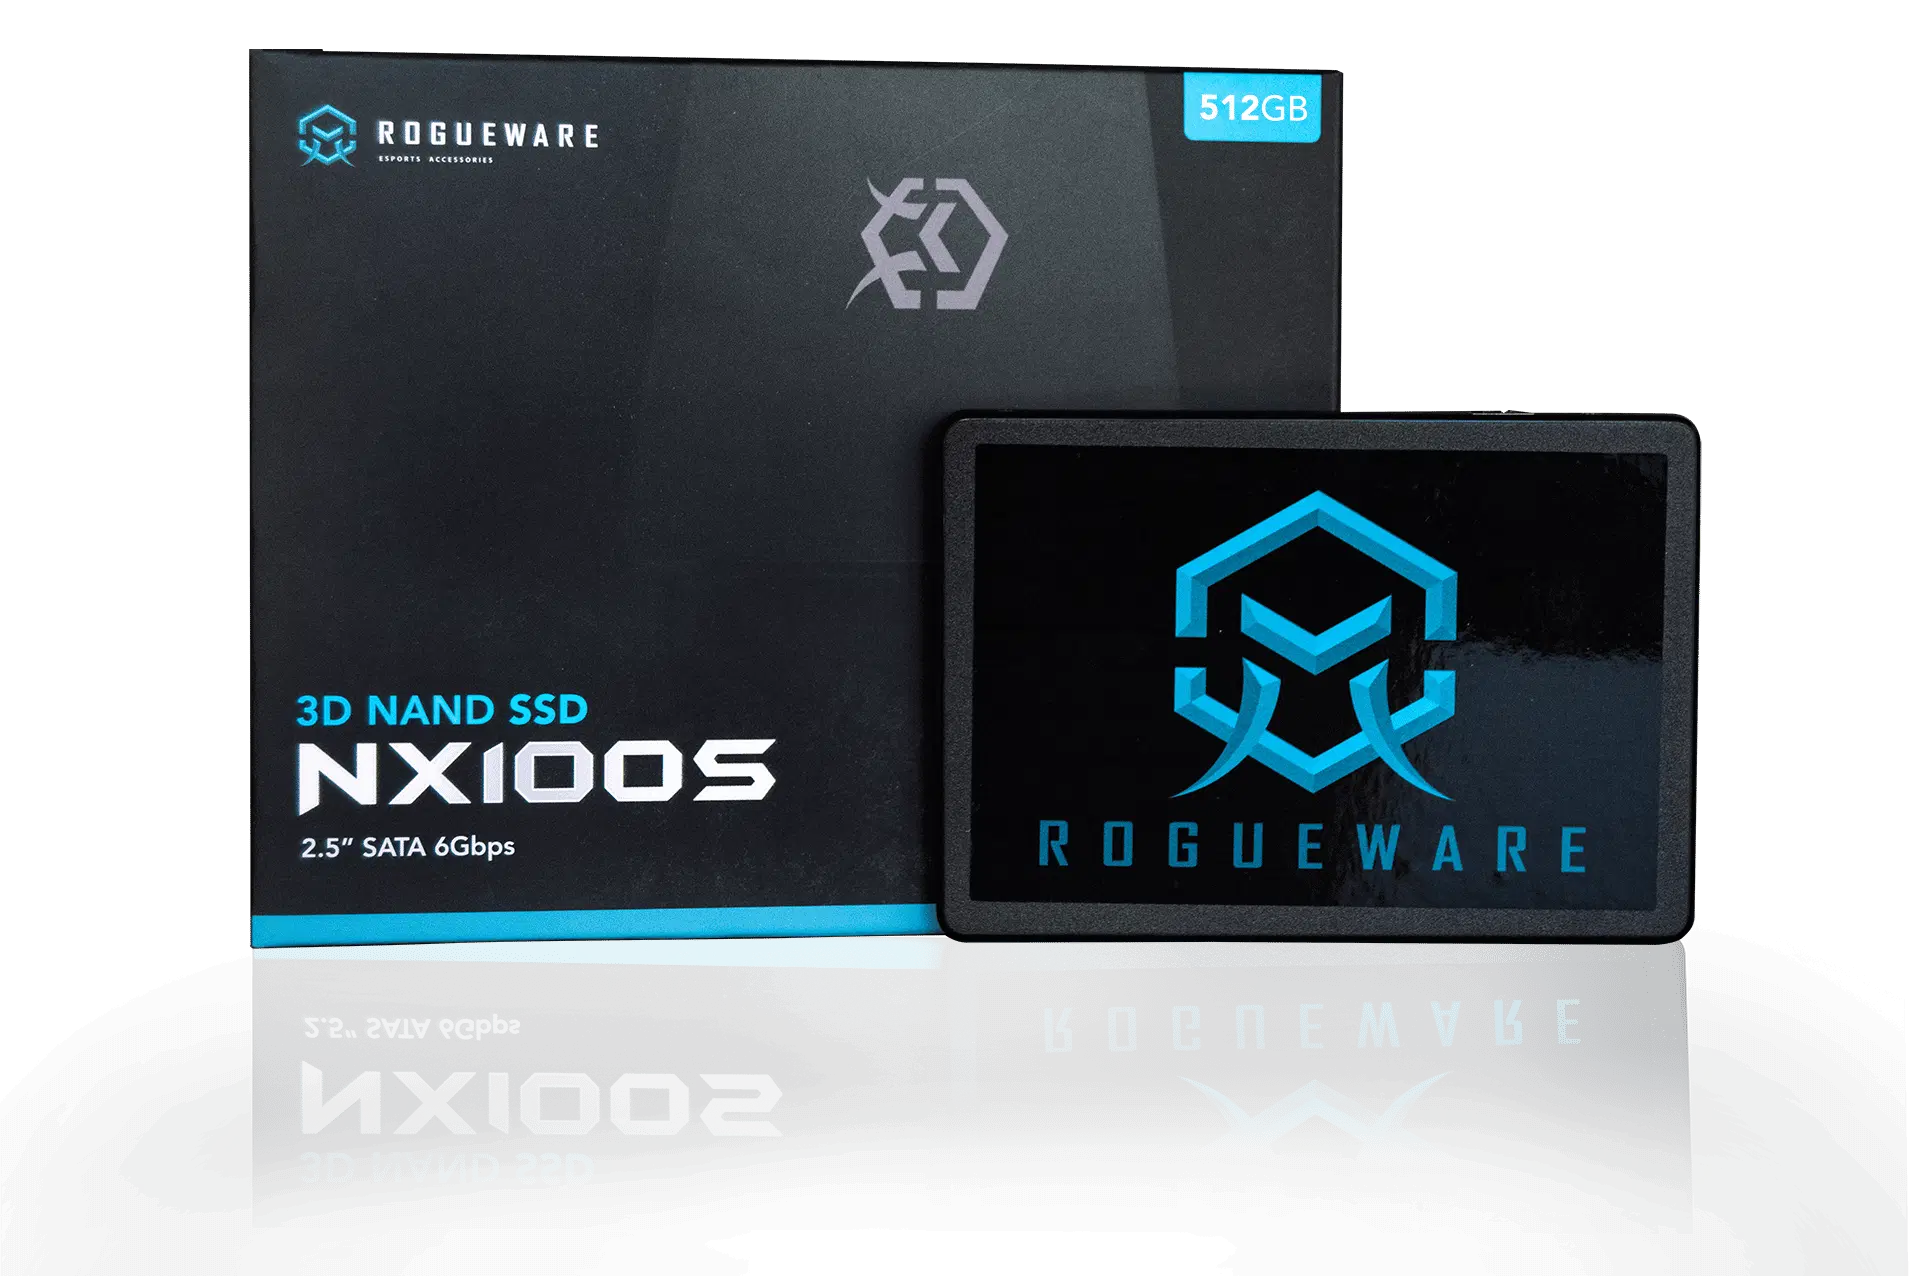 Rogueware NX100S 512GB 2.5' 3D NAND SSD